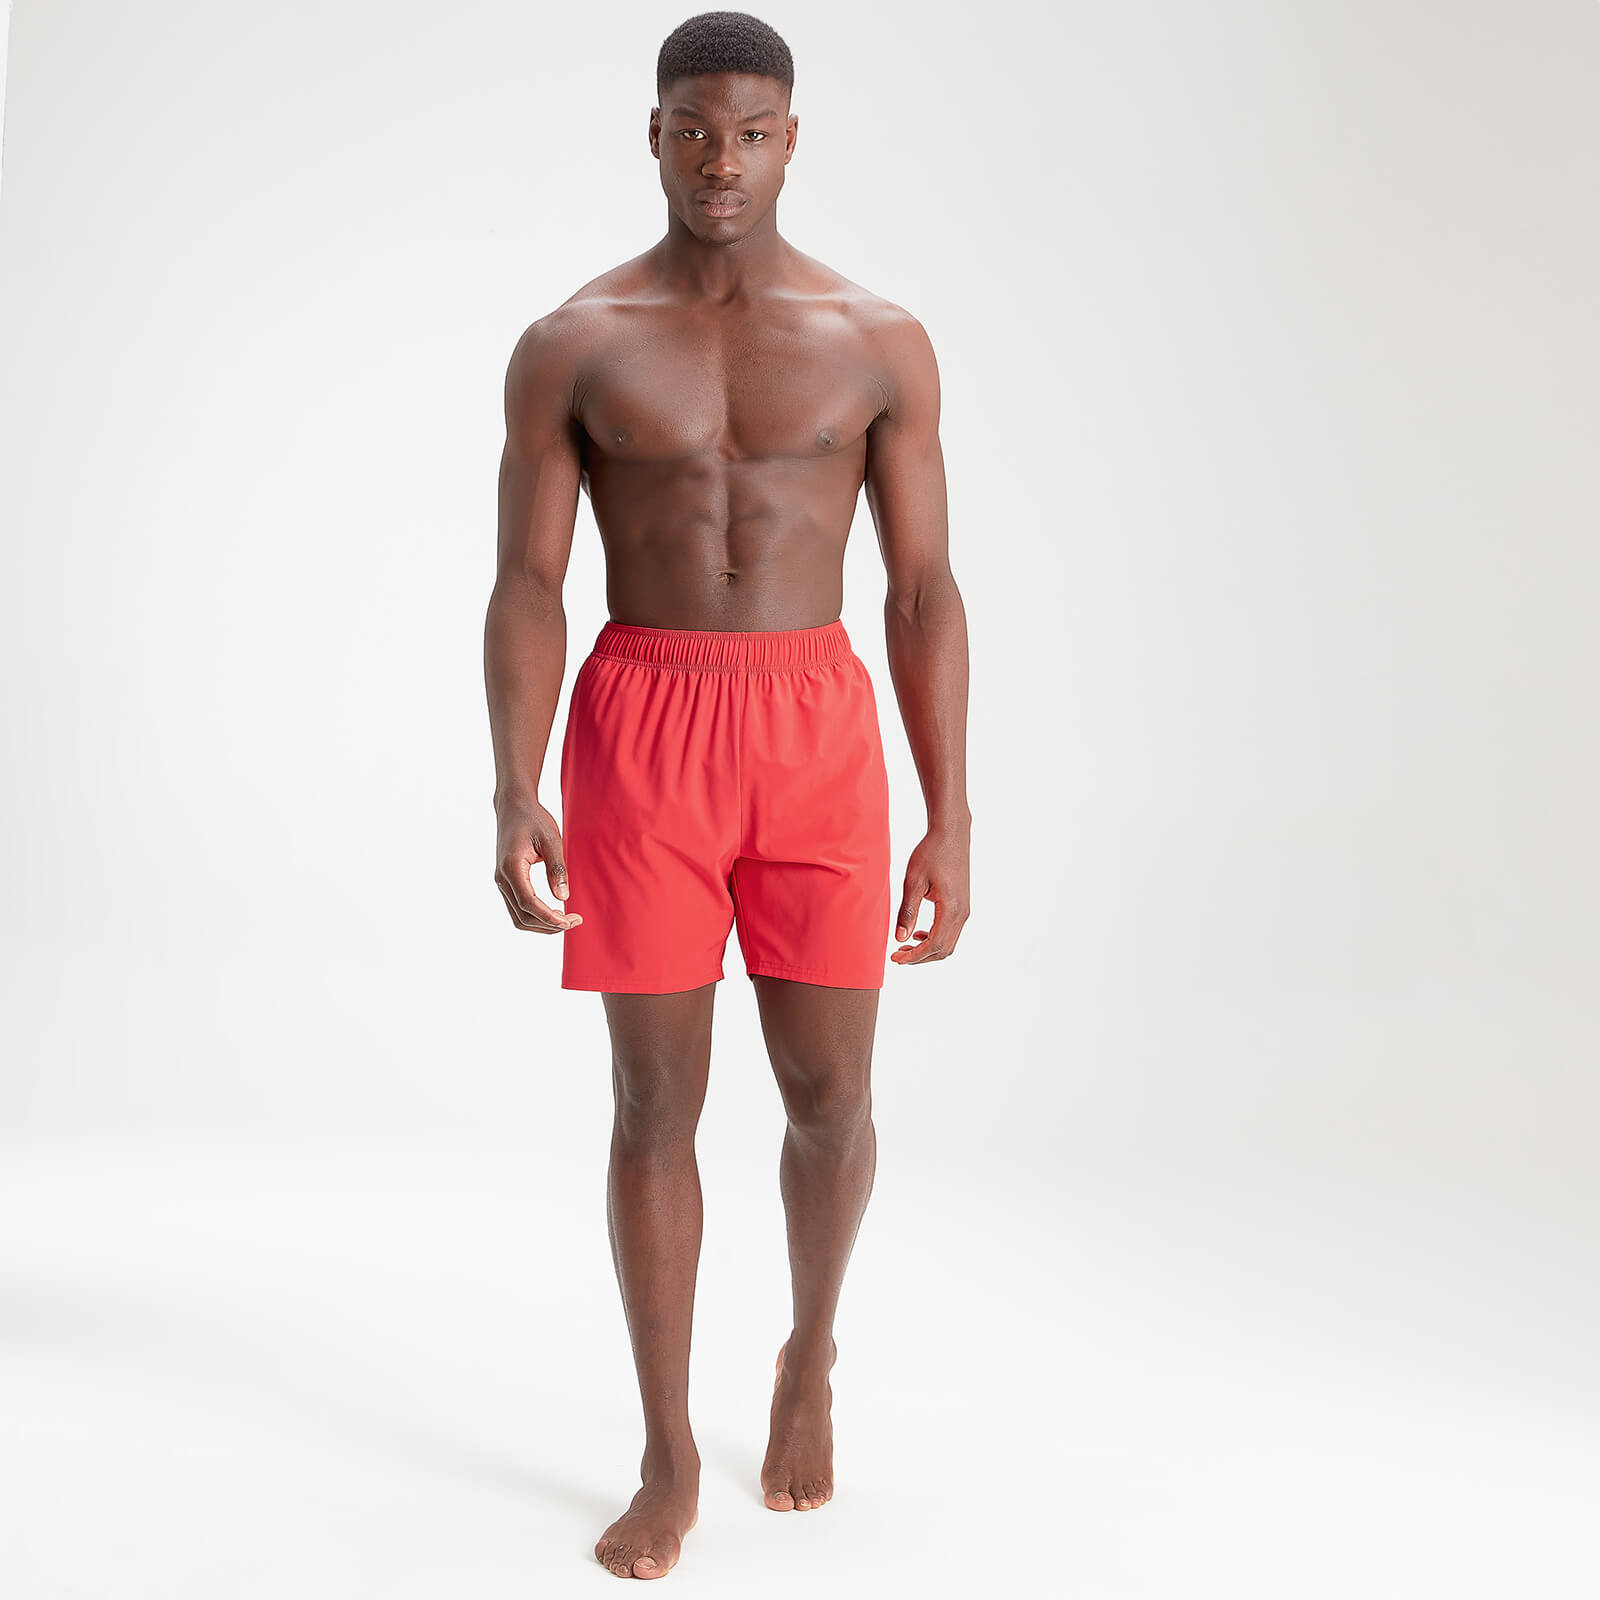 Men's Woven Training Shorts